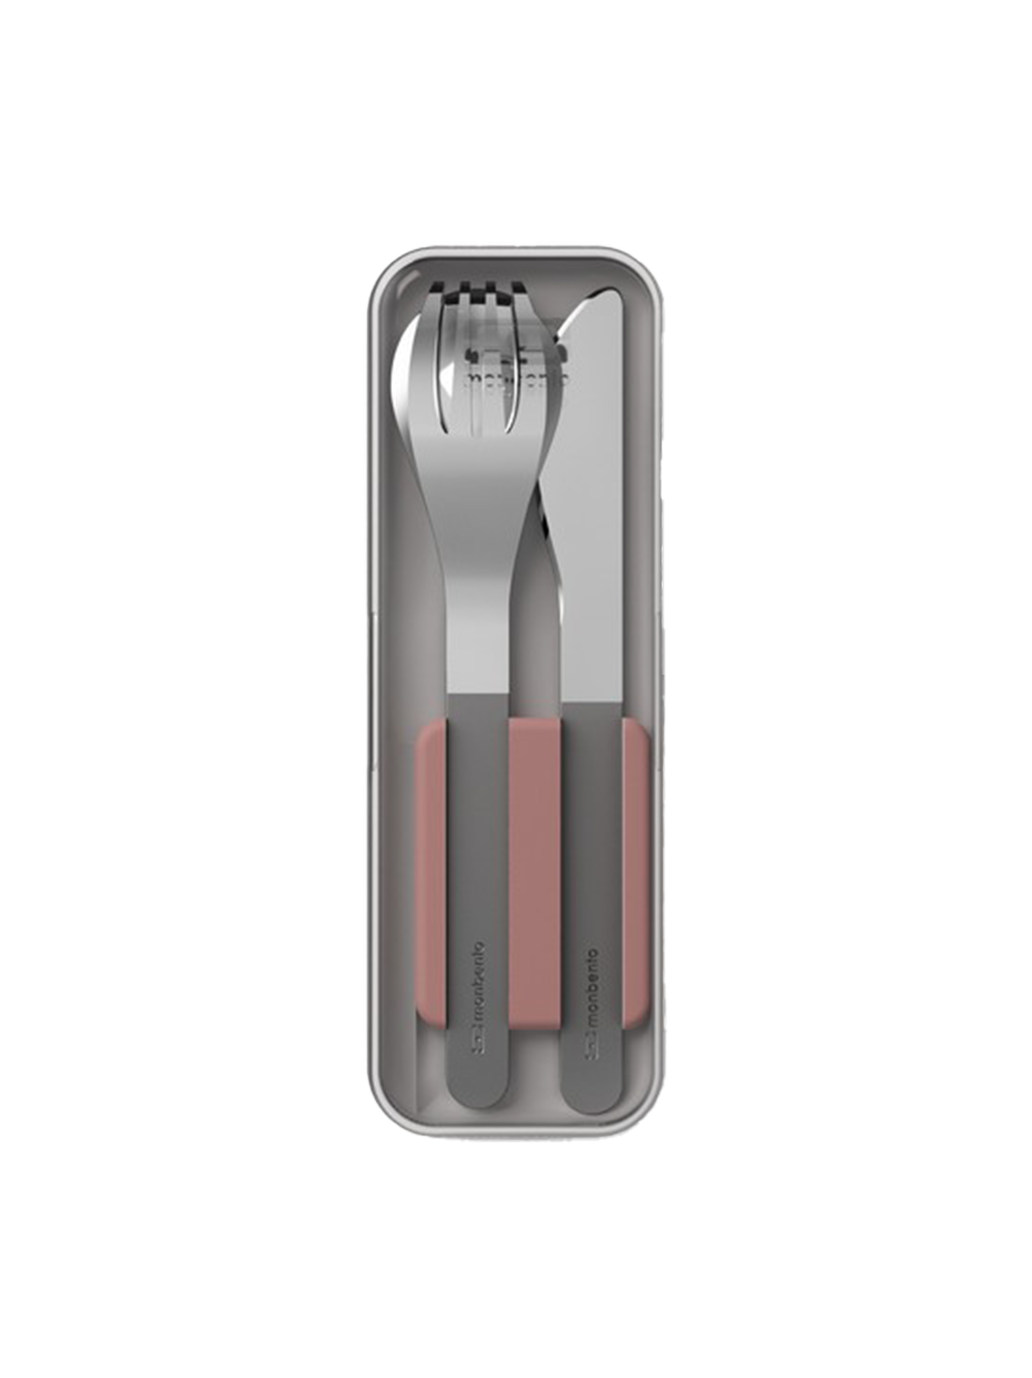 Cutlery set in a case